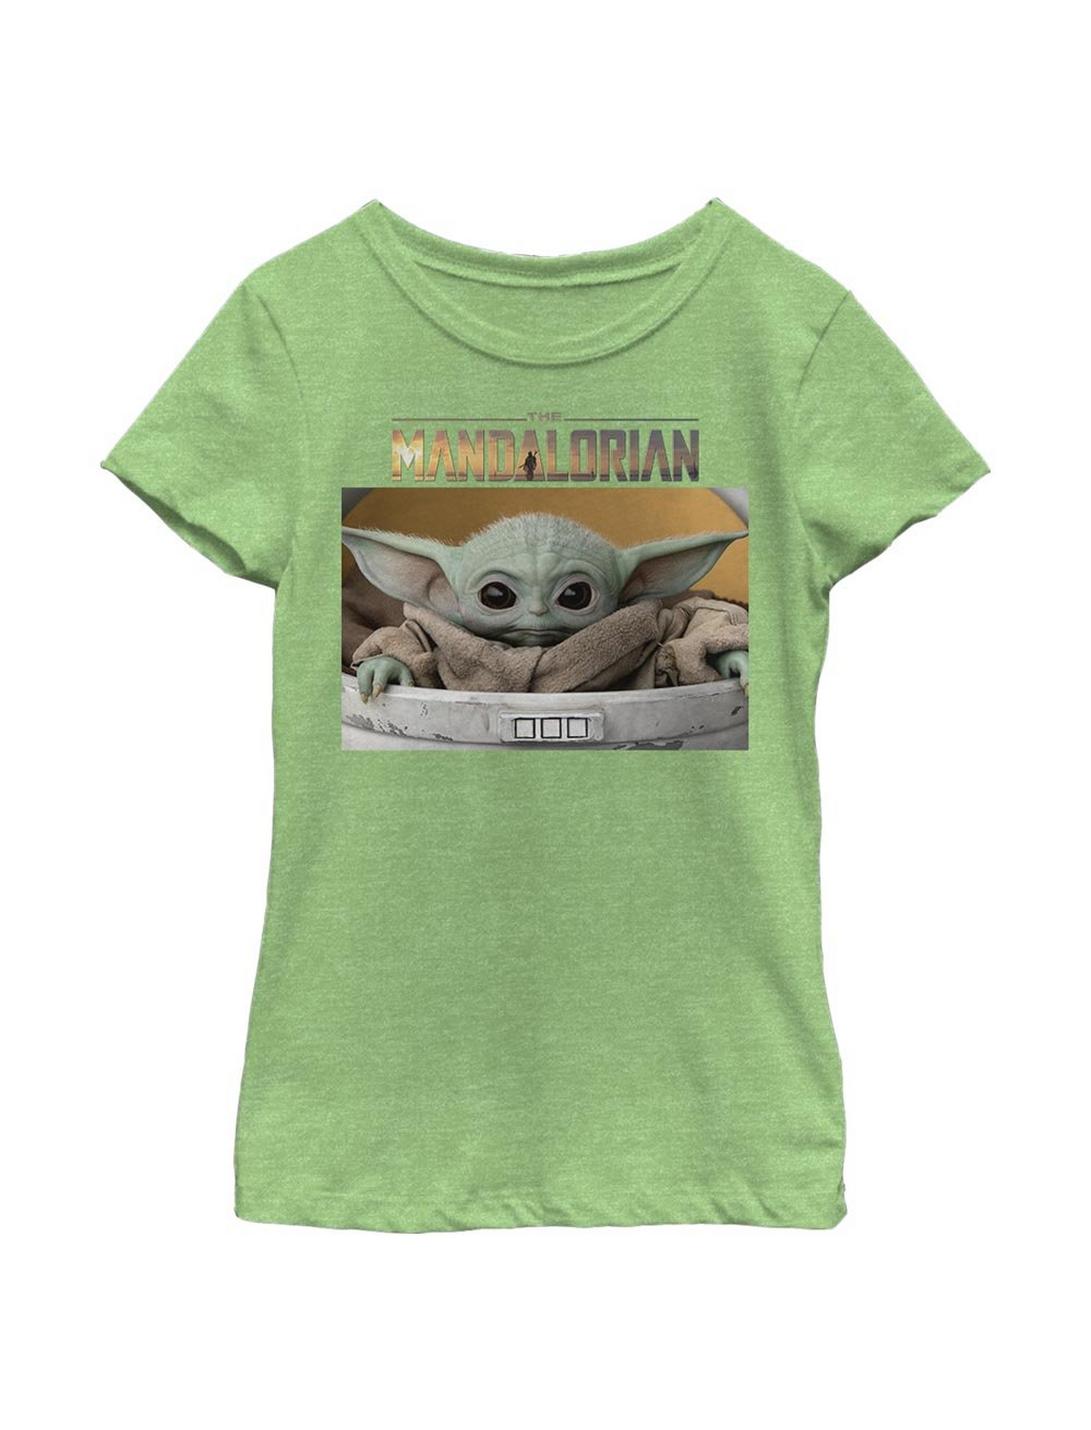 Star Wars The Mandalorian The Child Small Box Youth Girls T-Shirt, , hi-res